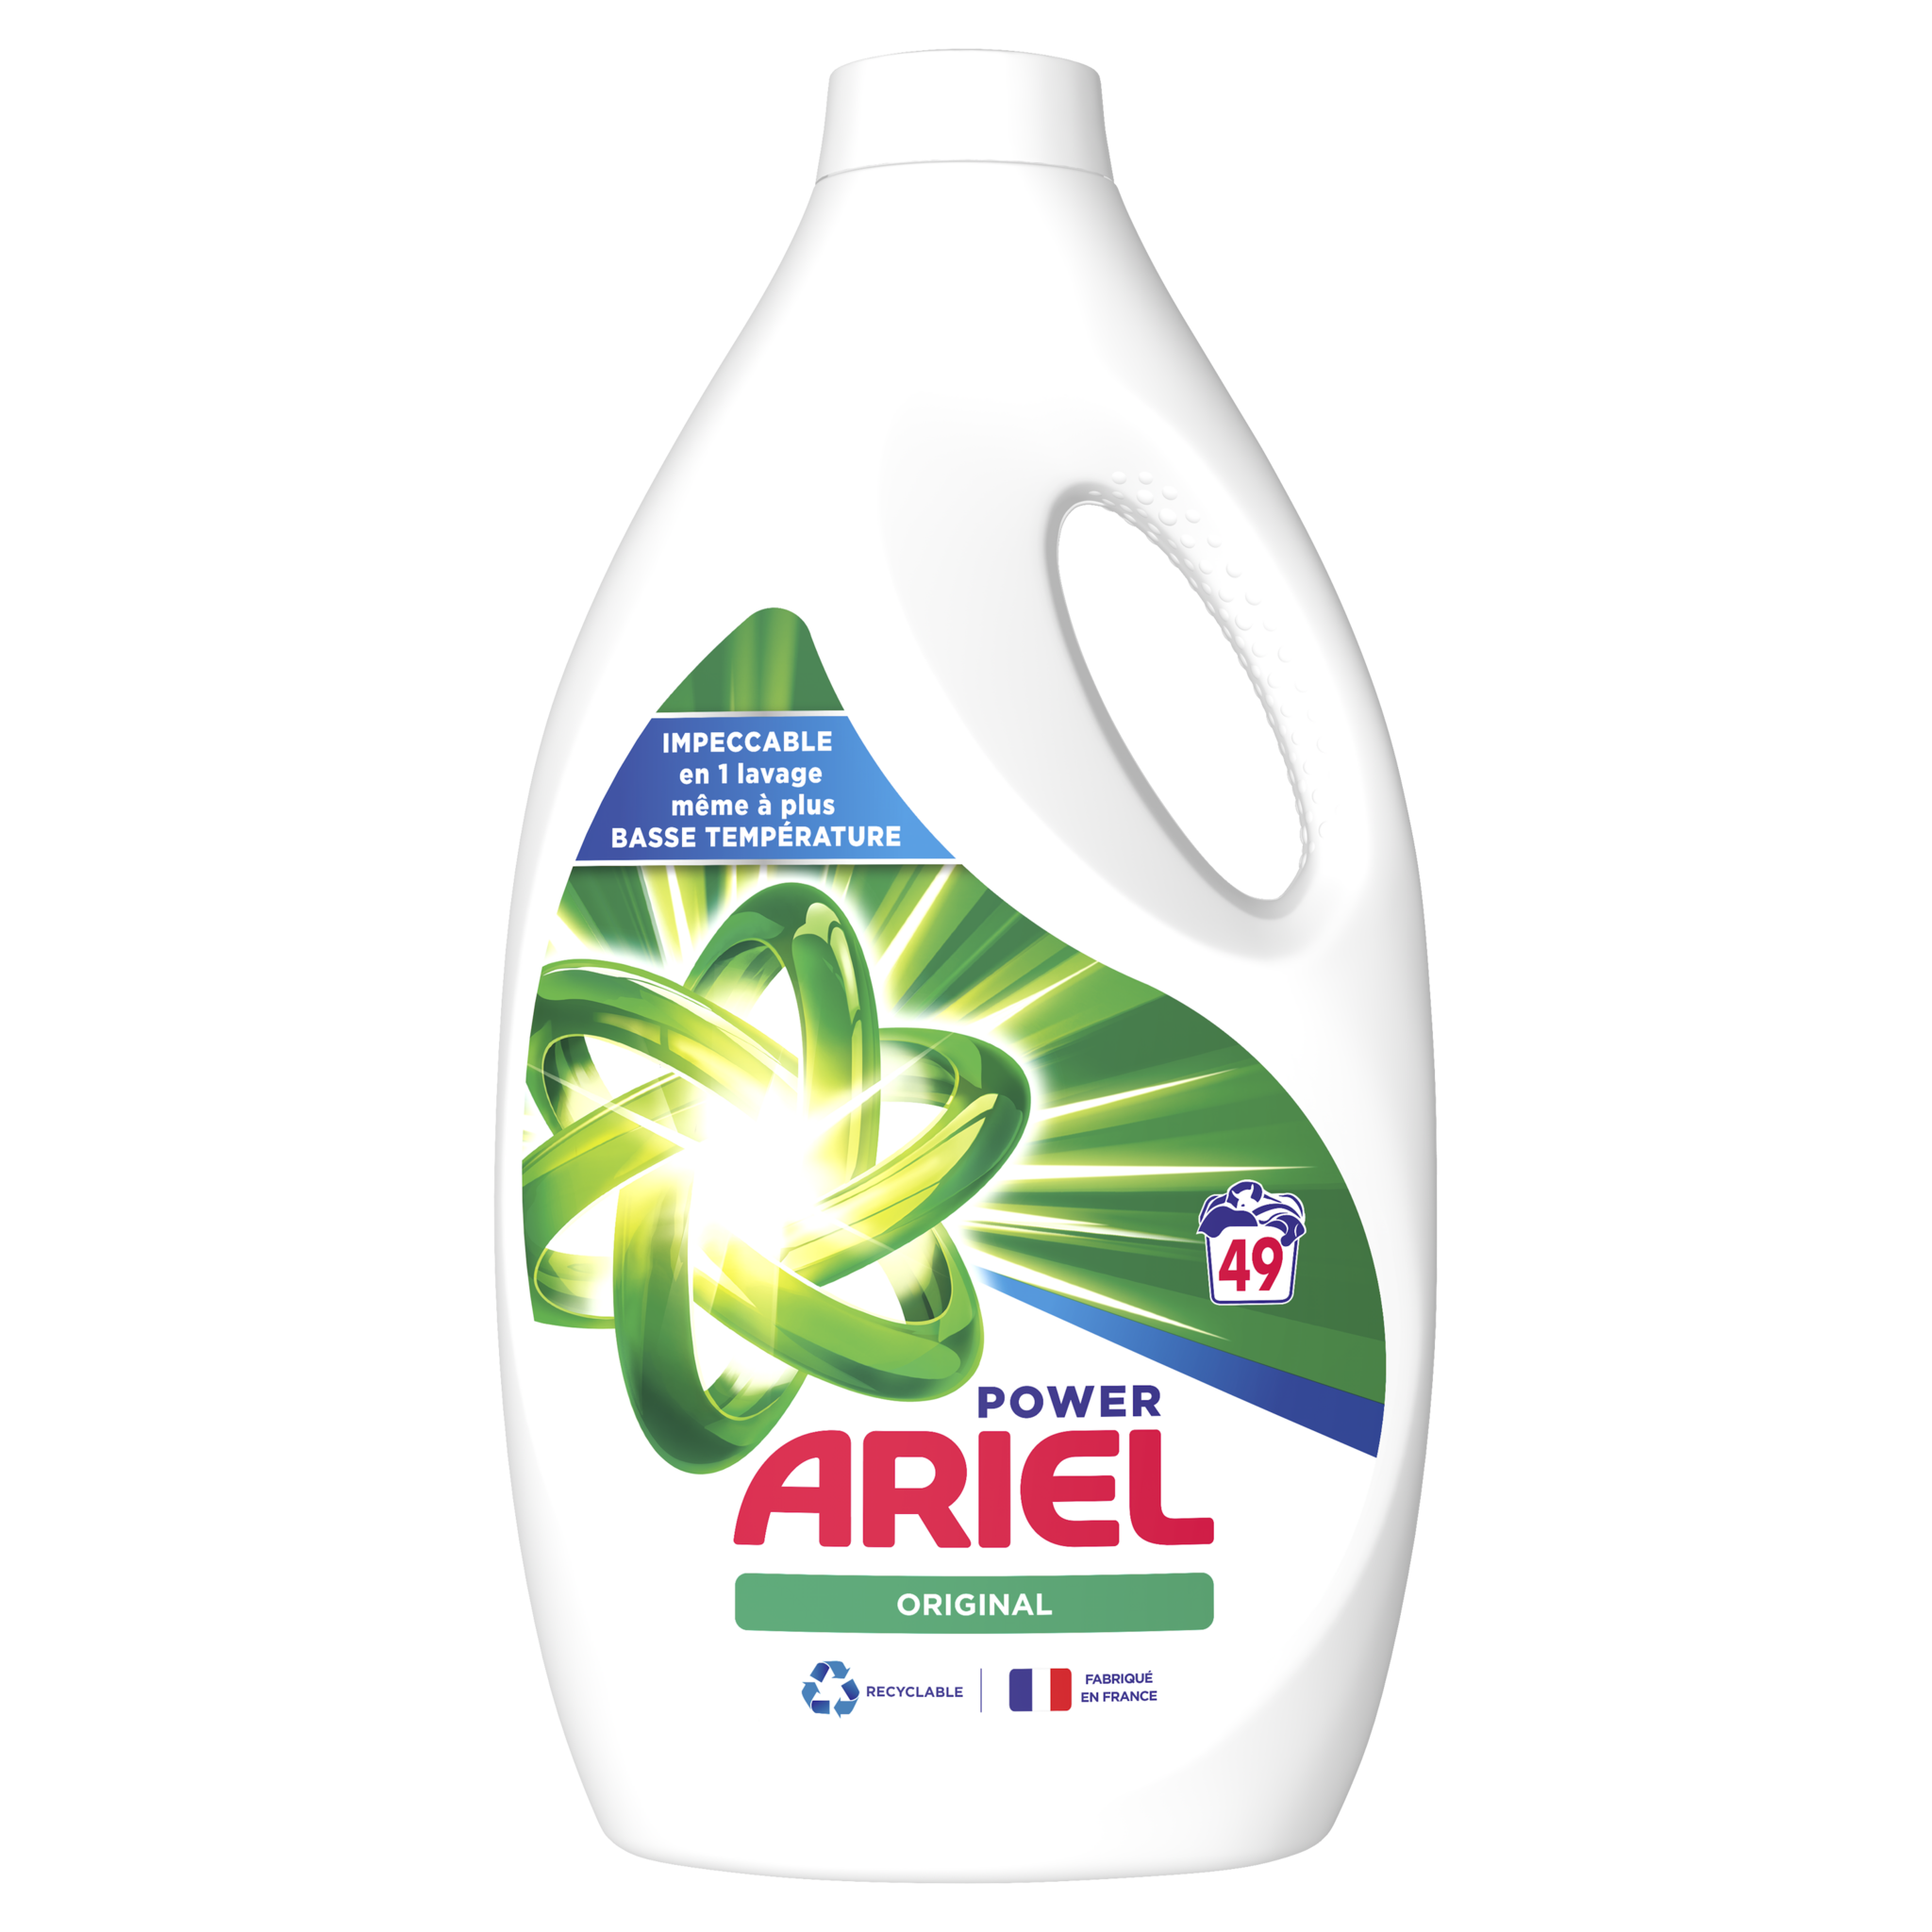 Lessive liquide 70% d'origine végétale 20 doses, Ariel (1.1 L)